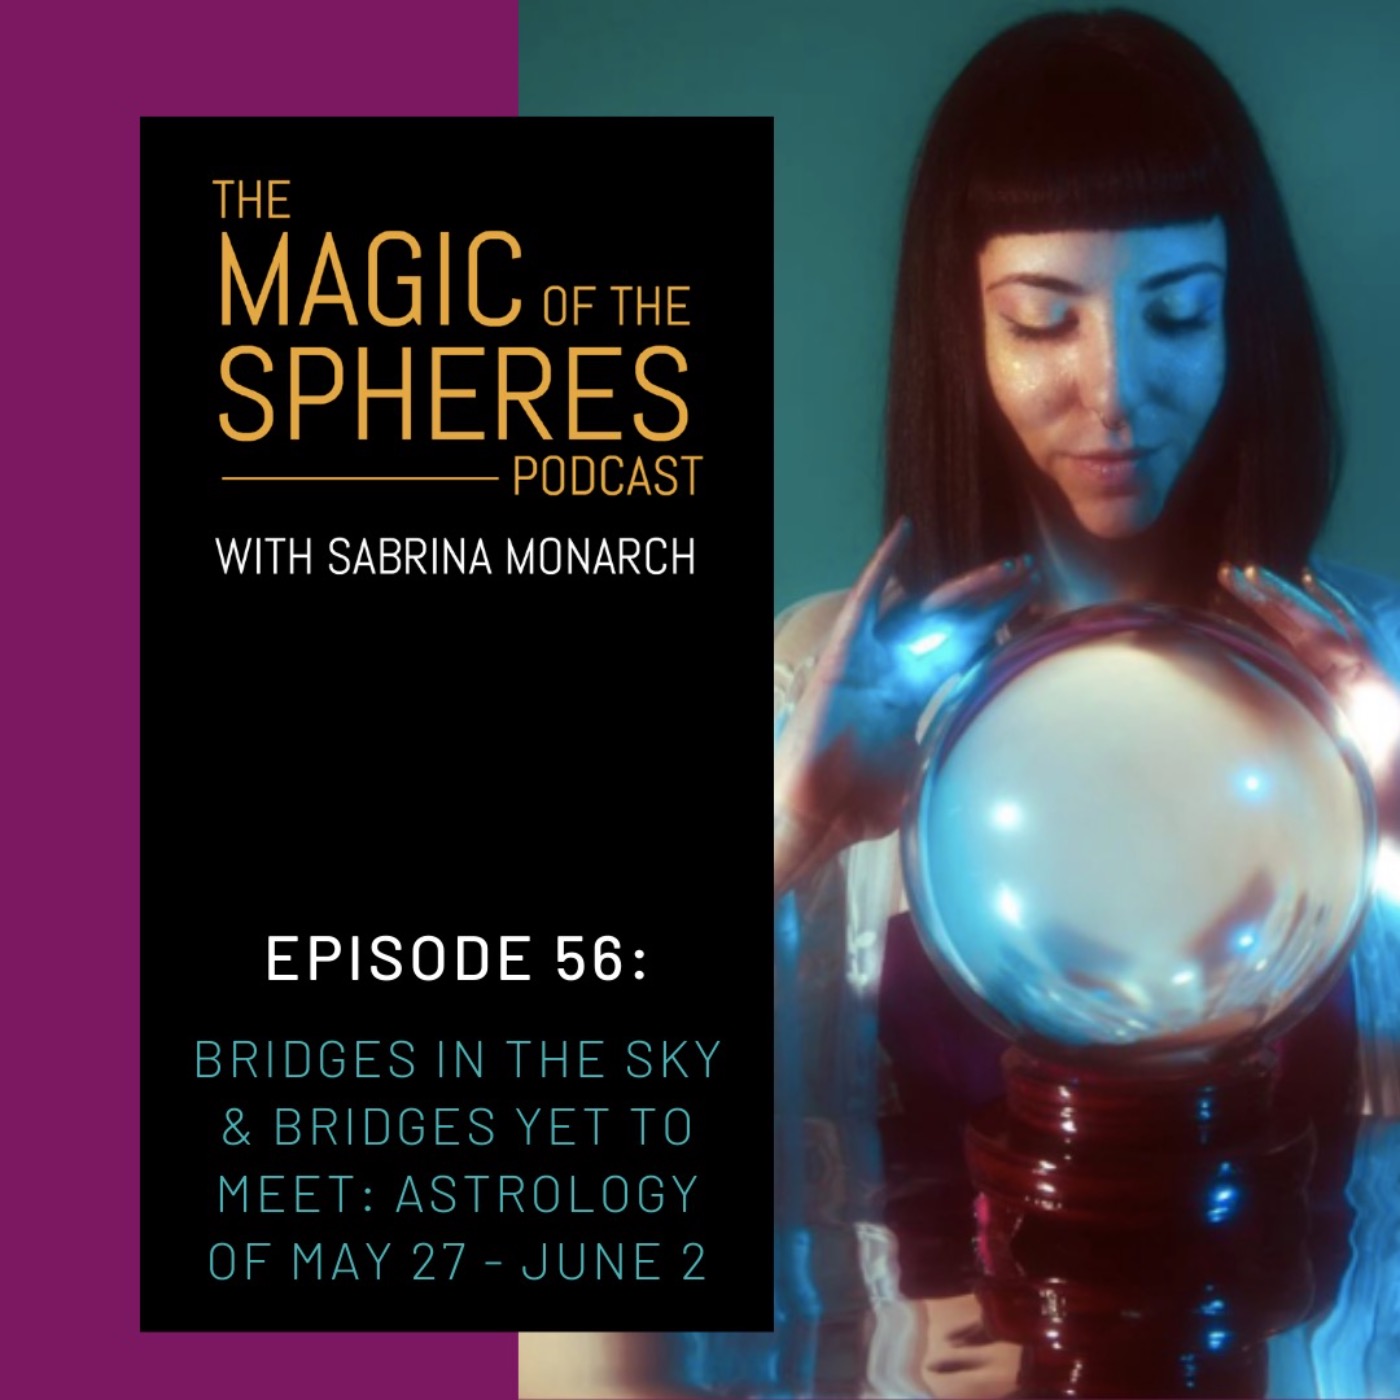 Bridges in the Sky & Bridges Yet to Meet: Astrology of May 27 - June 2